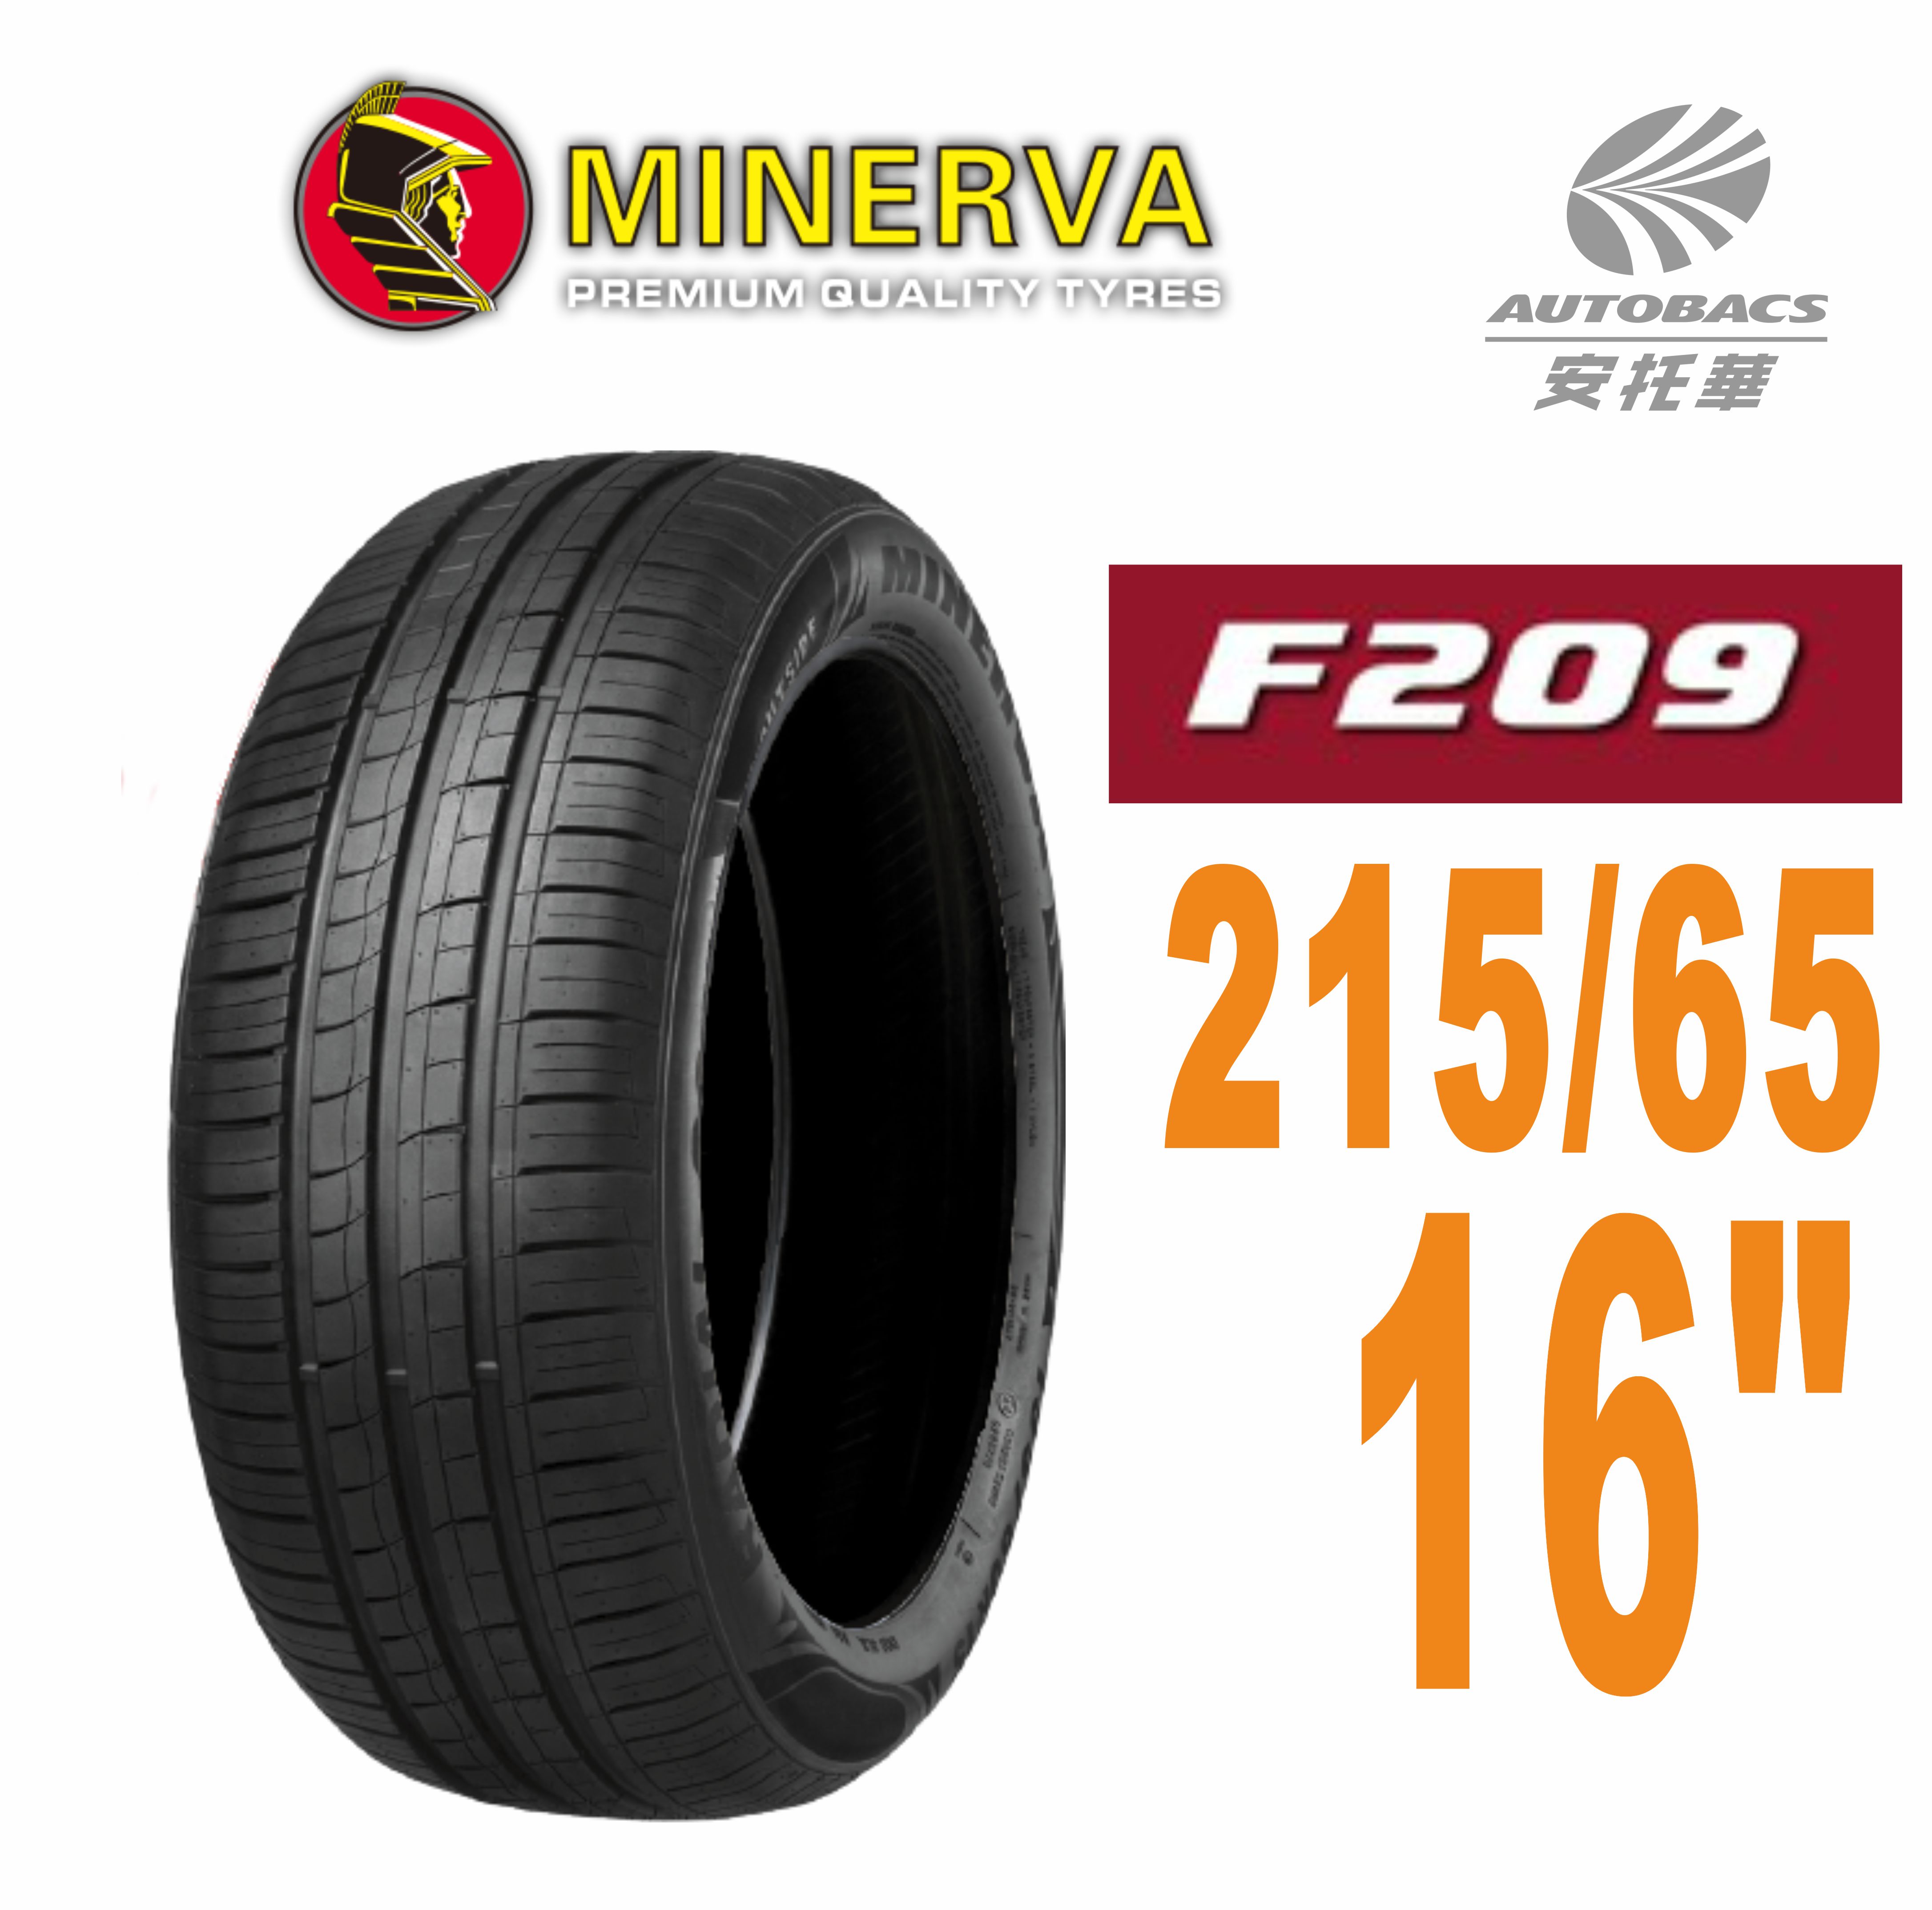 MINERVA 米納瓦輪胎 低噪/排水/運動/操控/轎車胎 F209 -215/65/16(安托華)